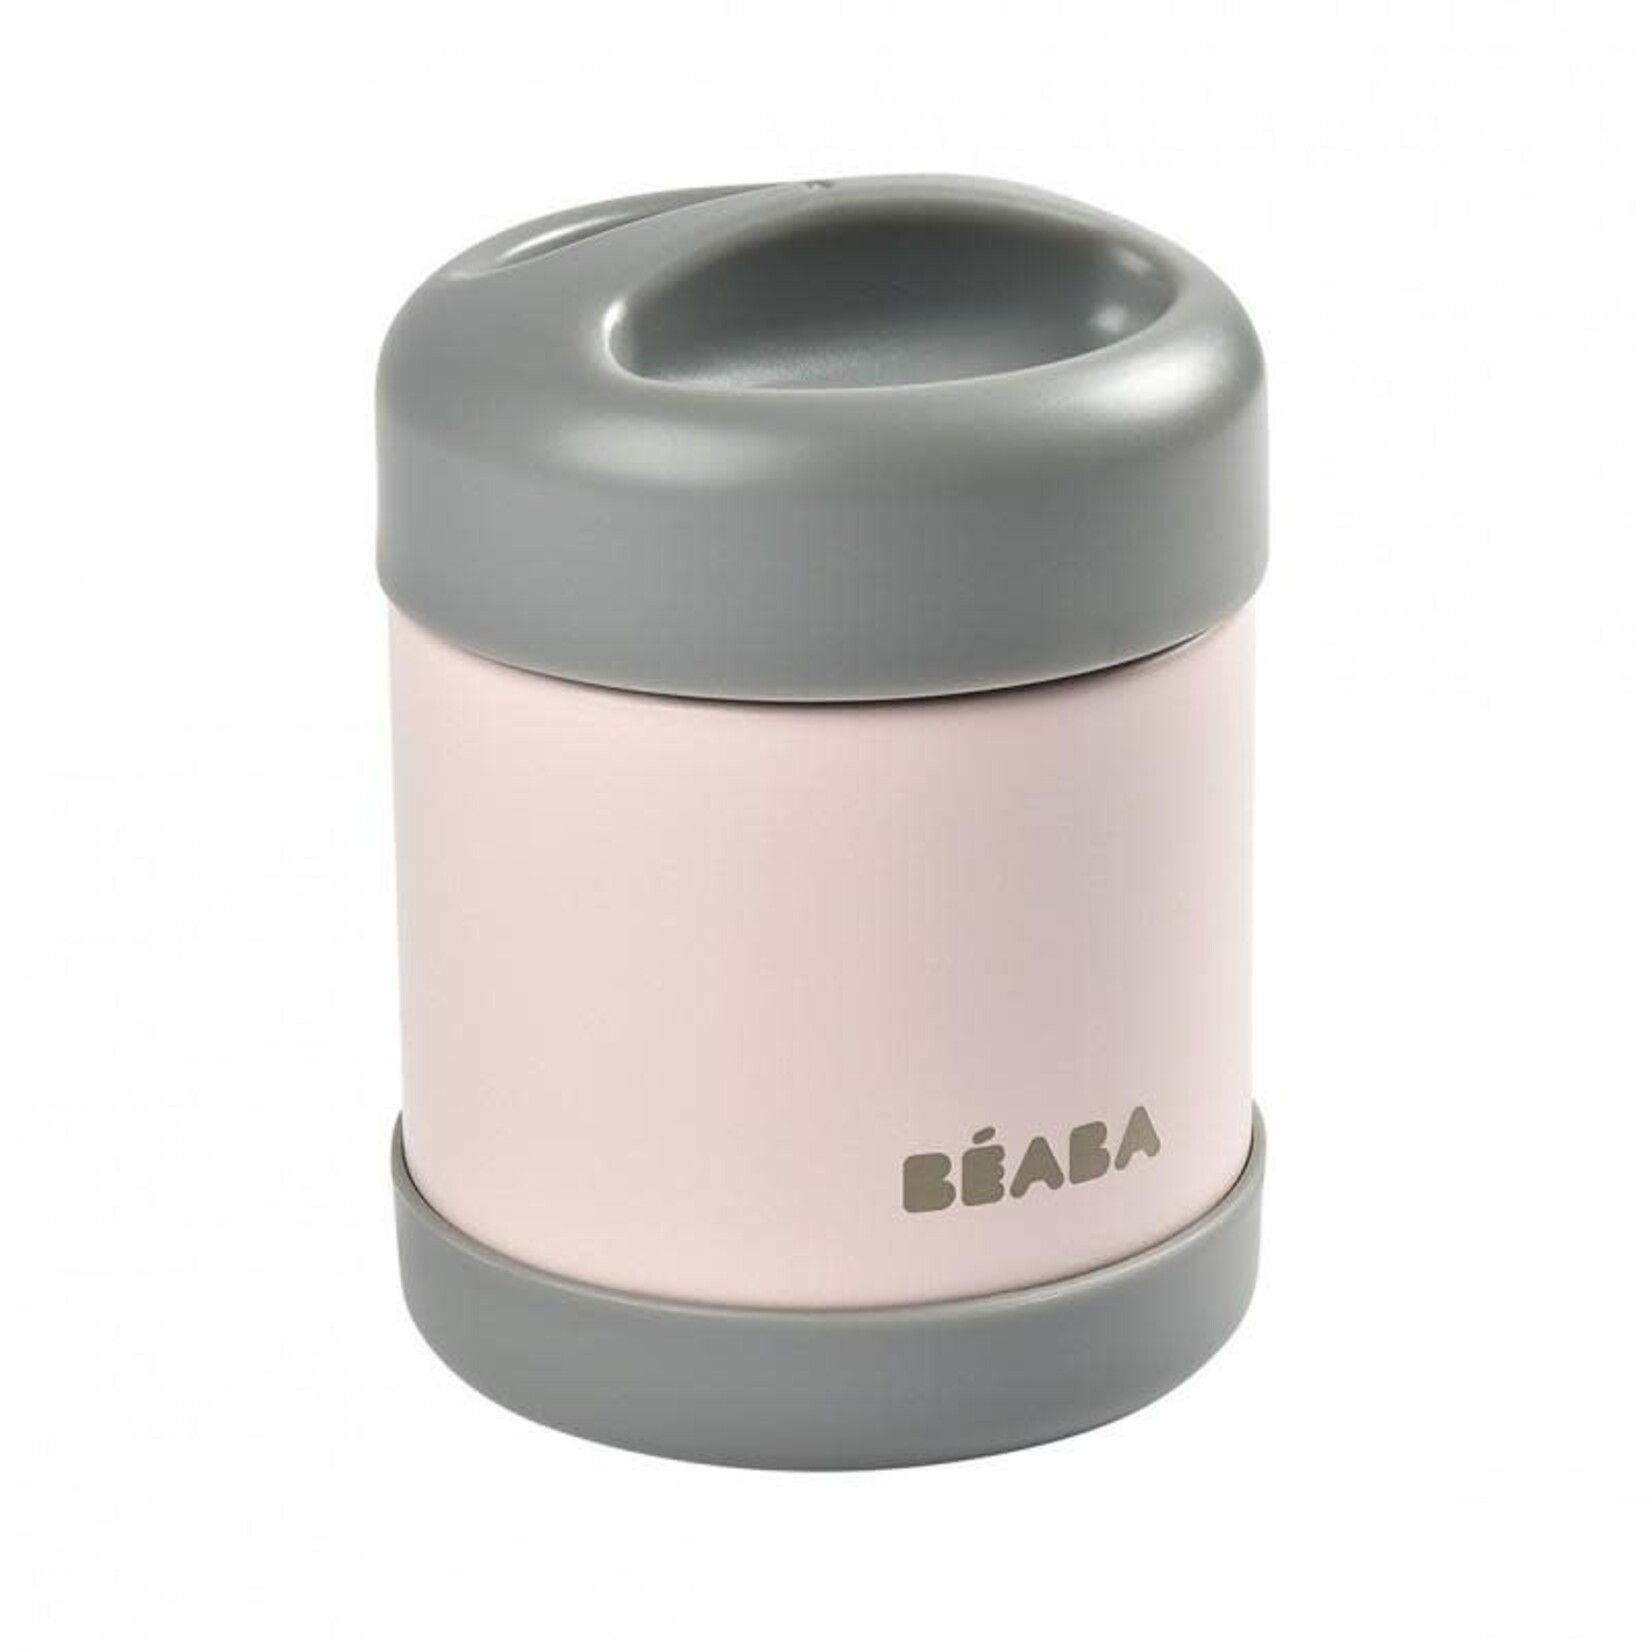 Beaba Beaba - RVS thermo-portie 300ml (dark mist/light pink)